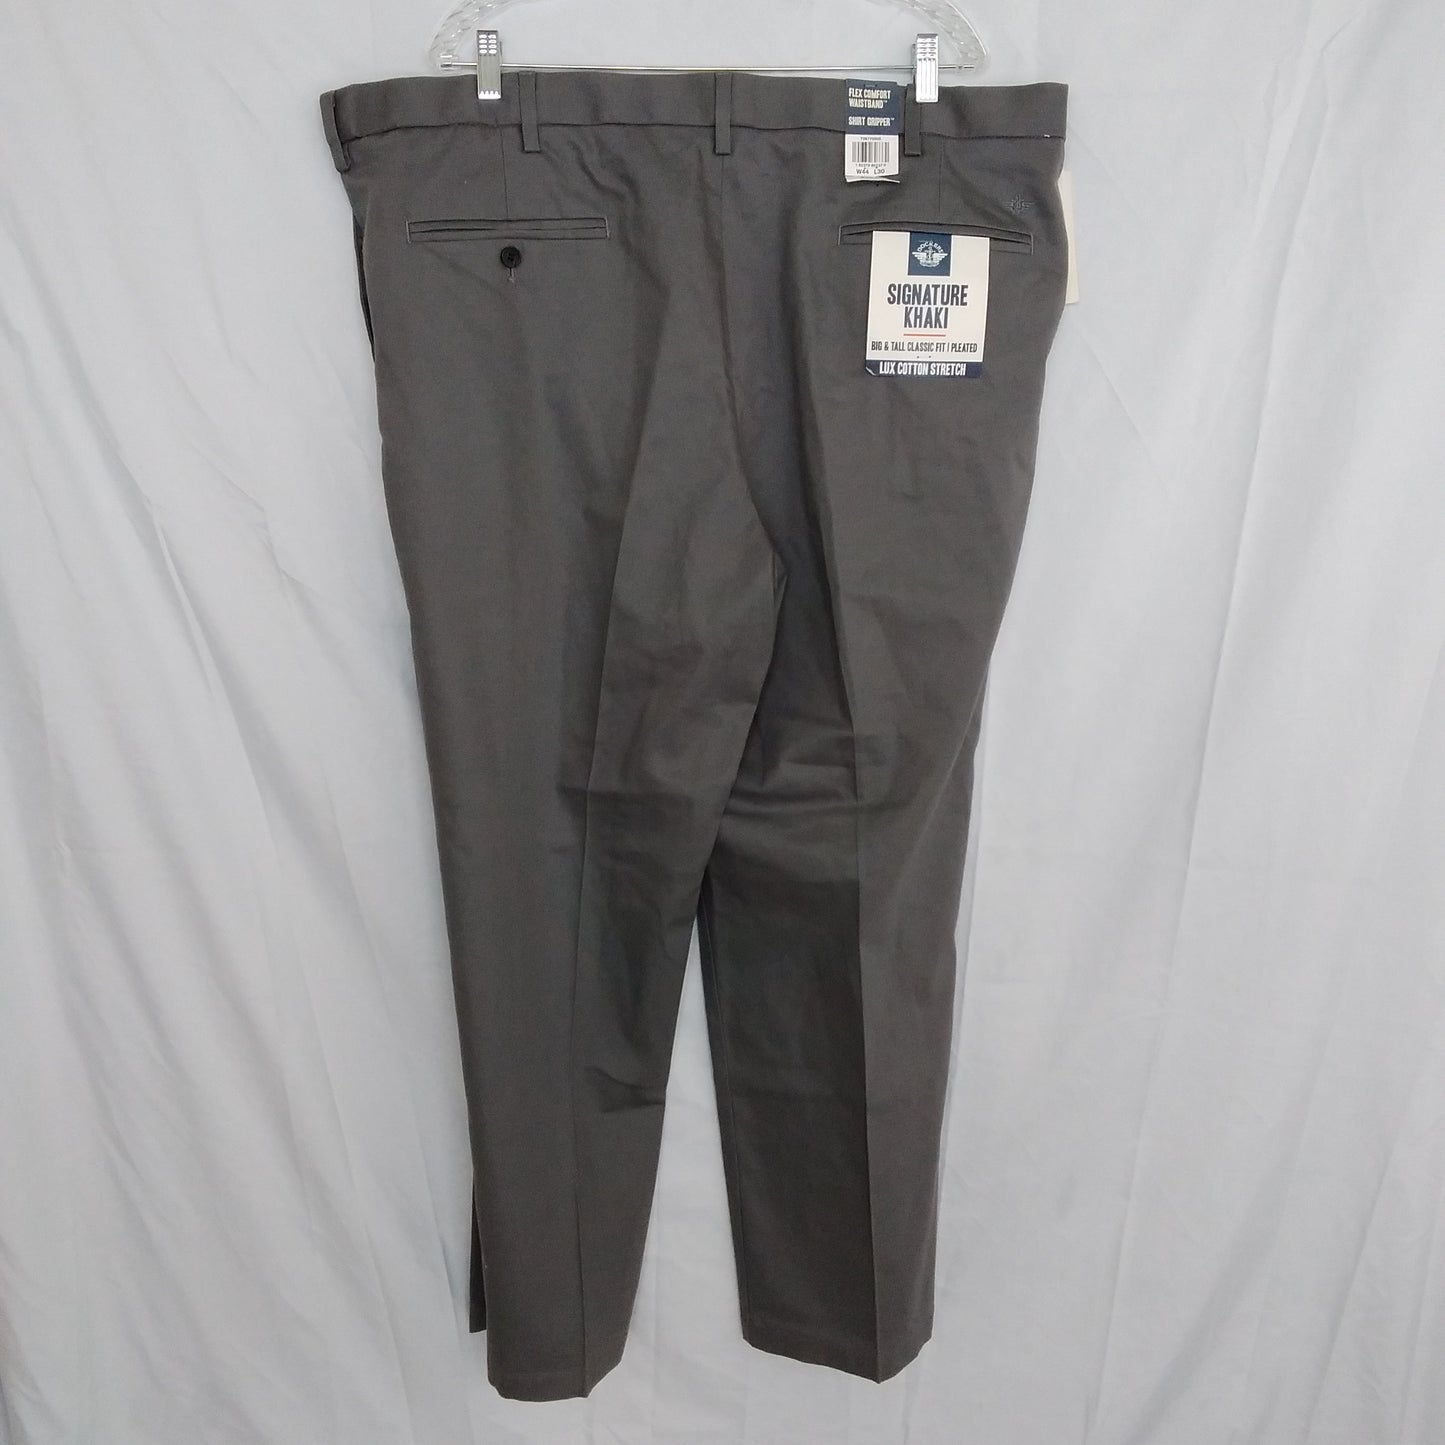 Dockers Men's Big & Tall Gray Signature Khaki Pants - Size W44 L30